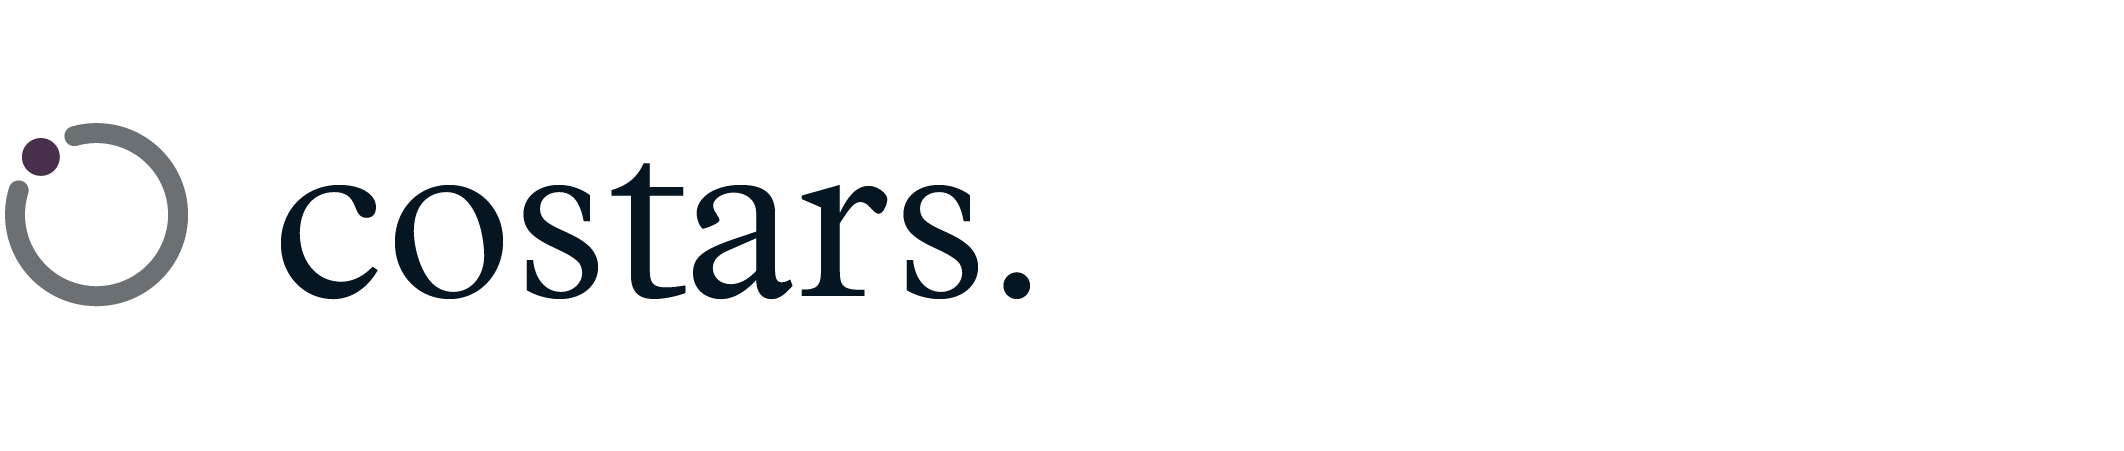 Costars logo